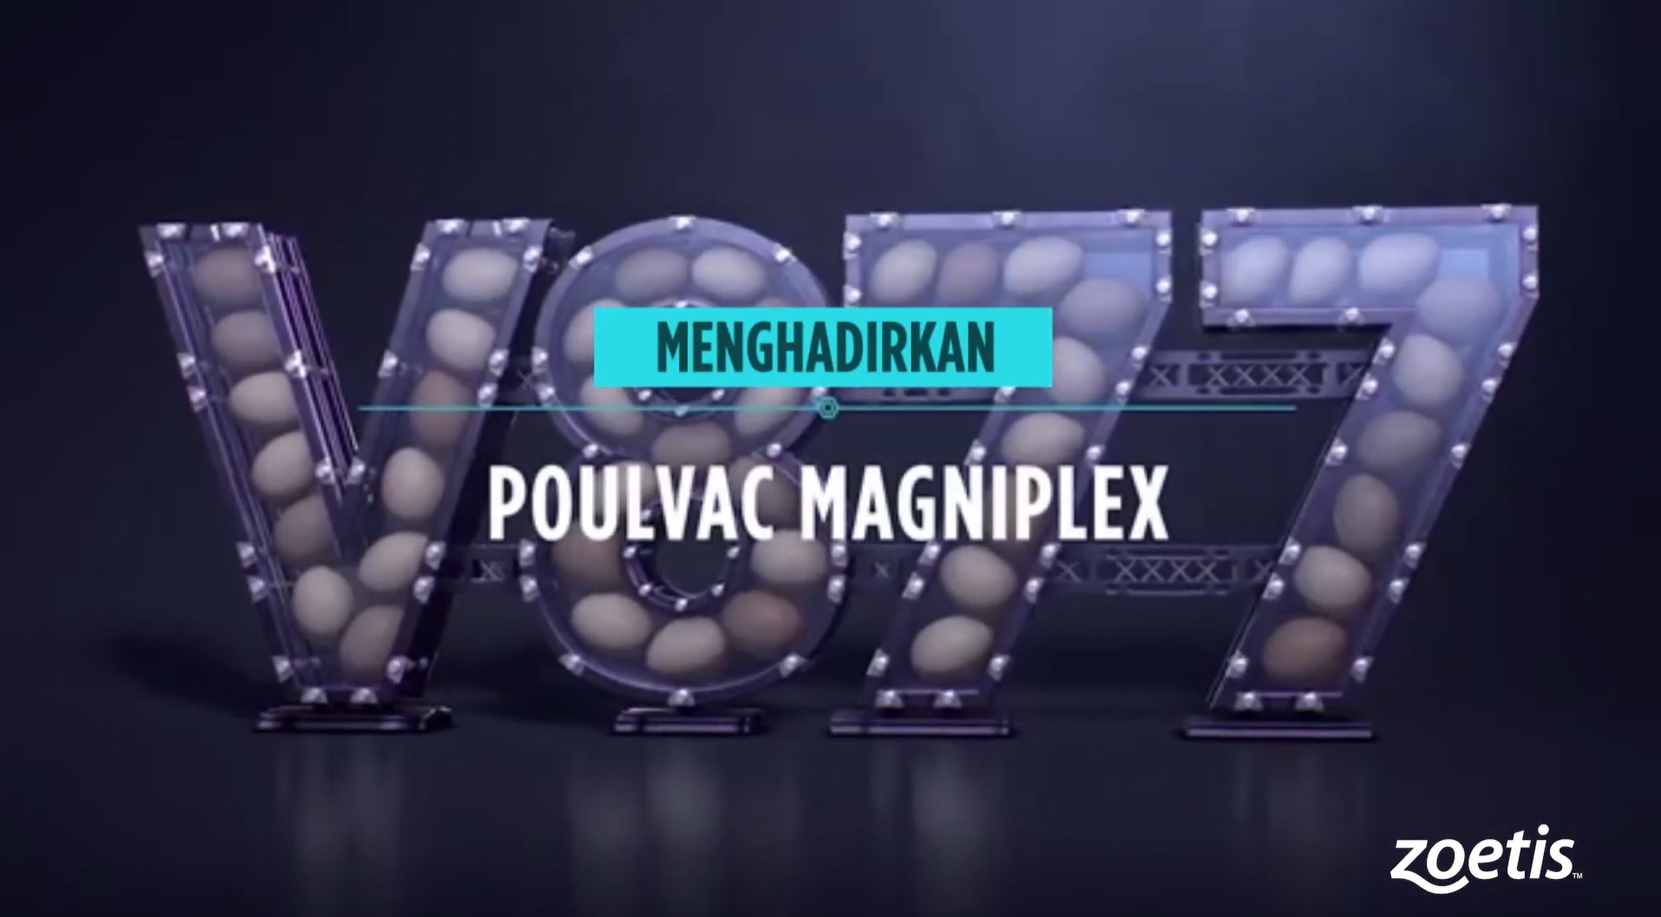 Poulvac Magniplex Video